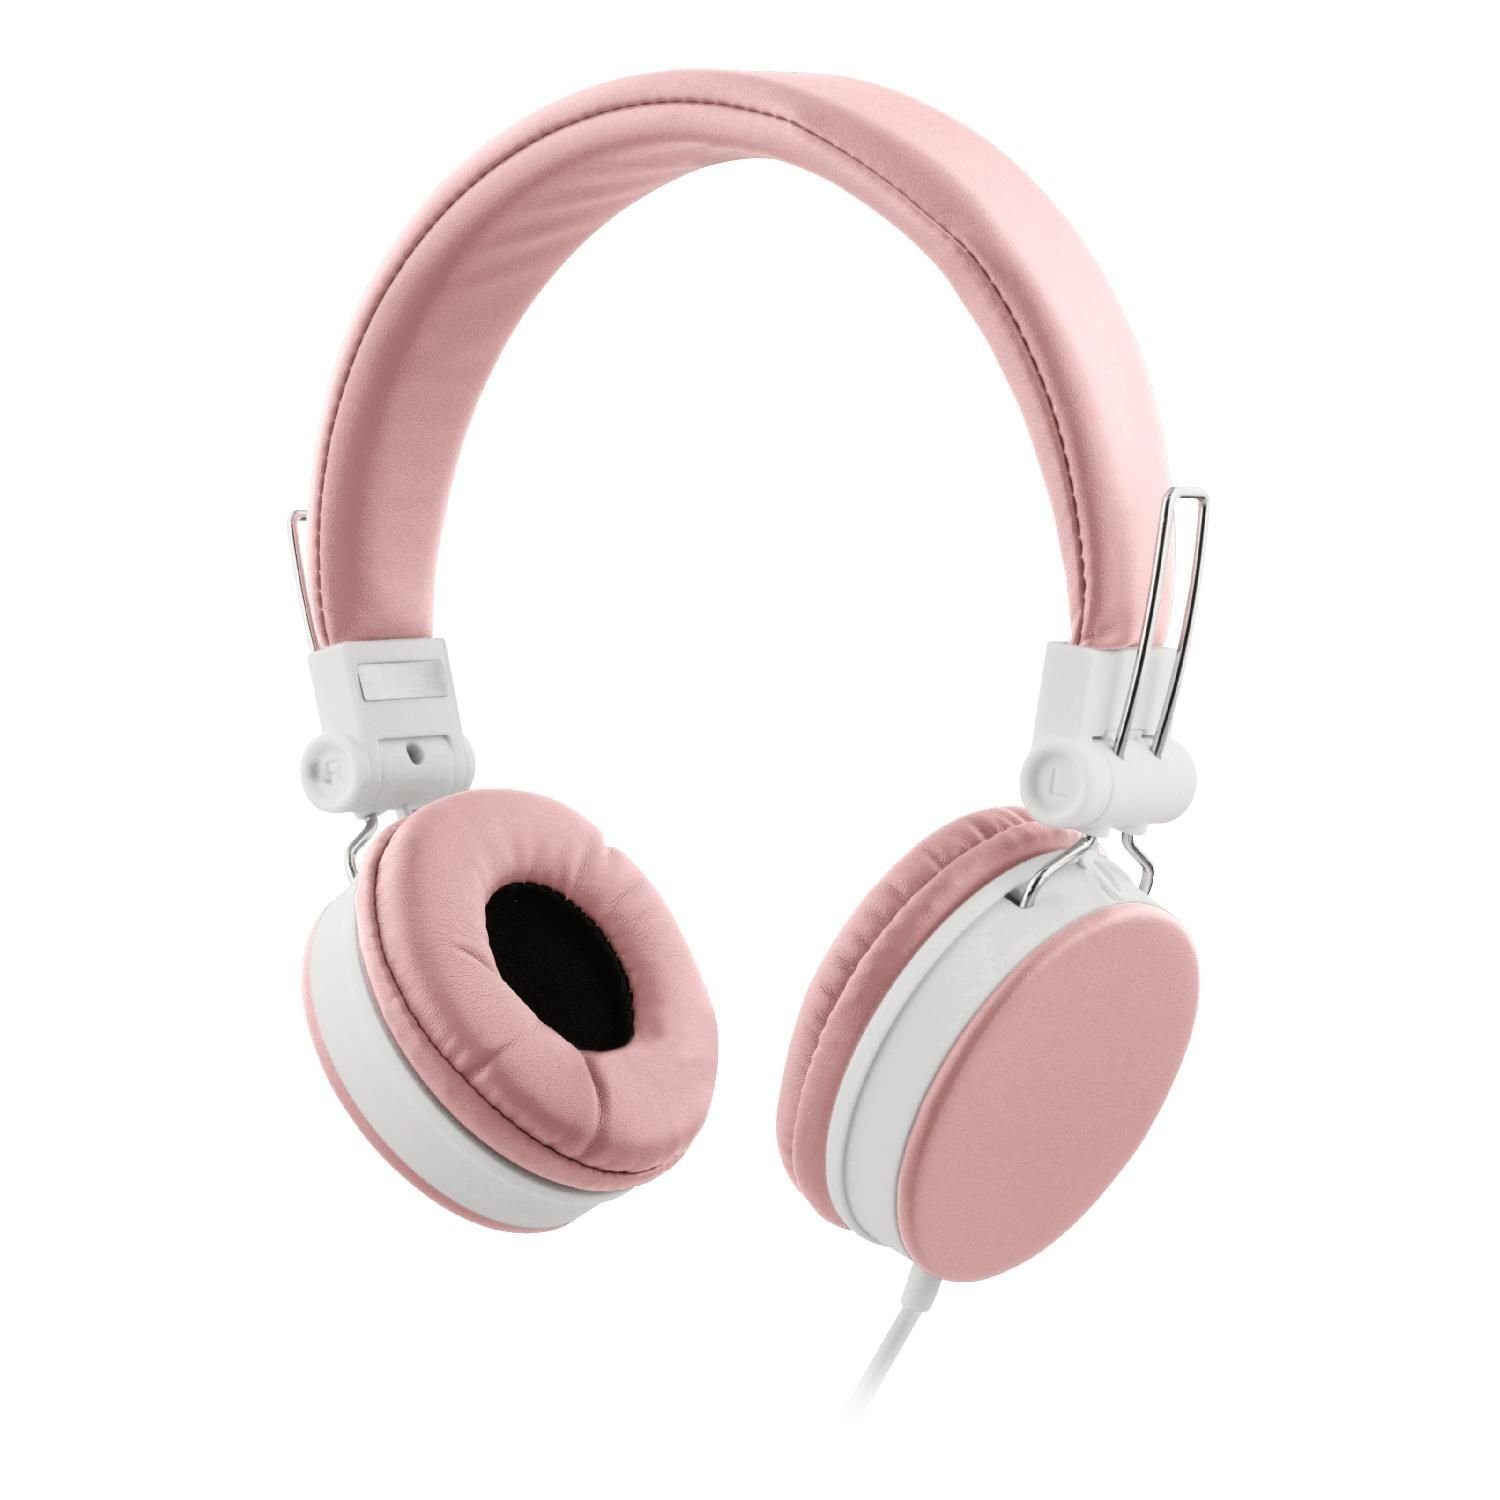 STREETZ Kopfhörer 1,2m Kabel 3.5mm Headset, Ohrpolster Klinkenanschluss (integriertes 5 On-Ear-Kopfhörer pink faltbares Jahre / Mikrofon, inkl. rosa, Herstellergarantie)